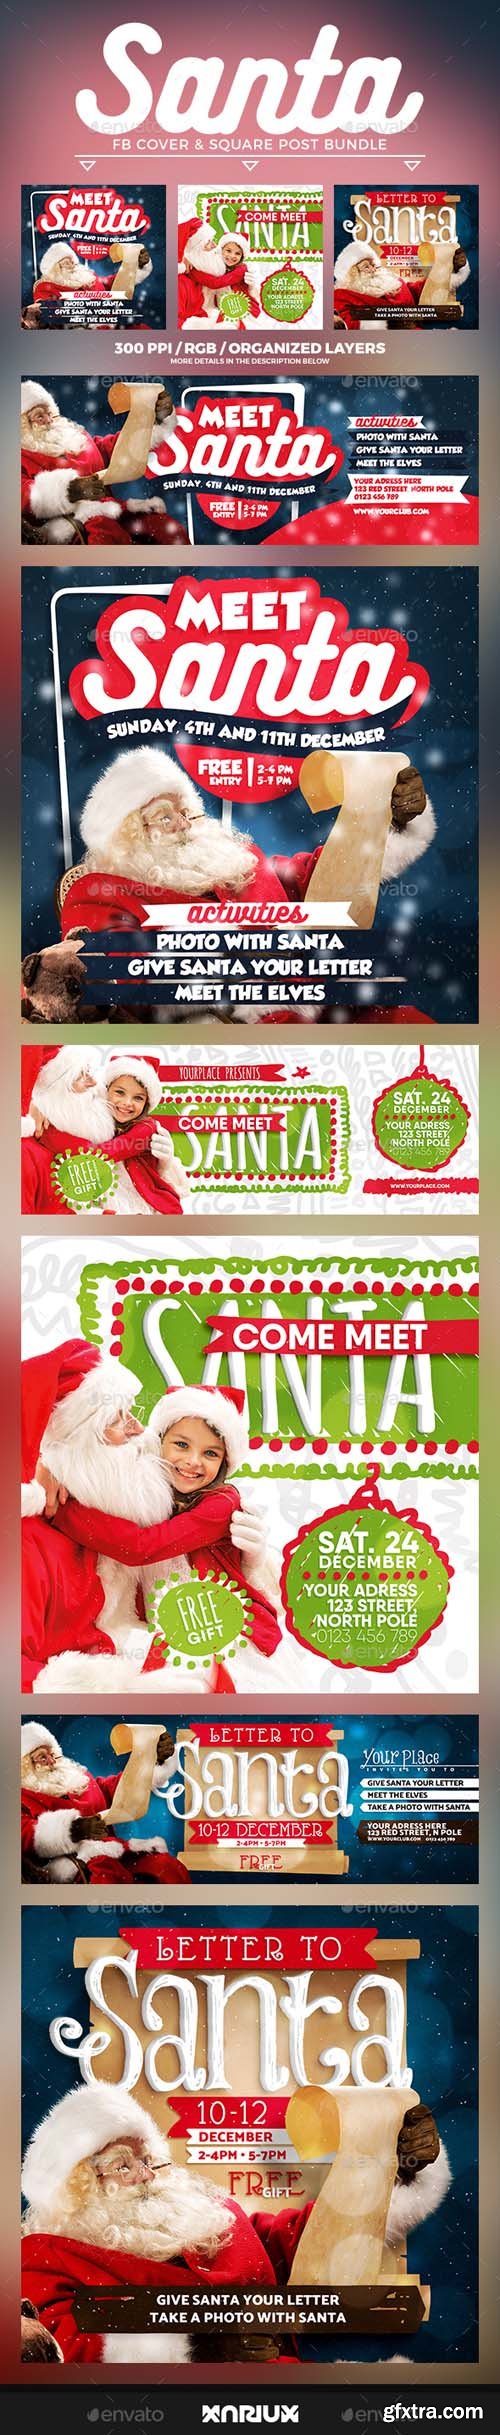 GR - Meet Santa Facebook Cover Bundle 20954391